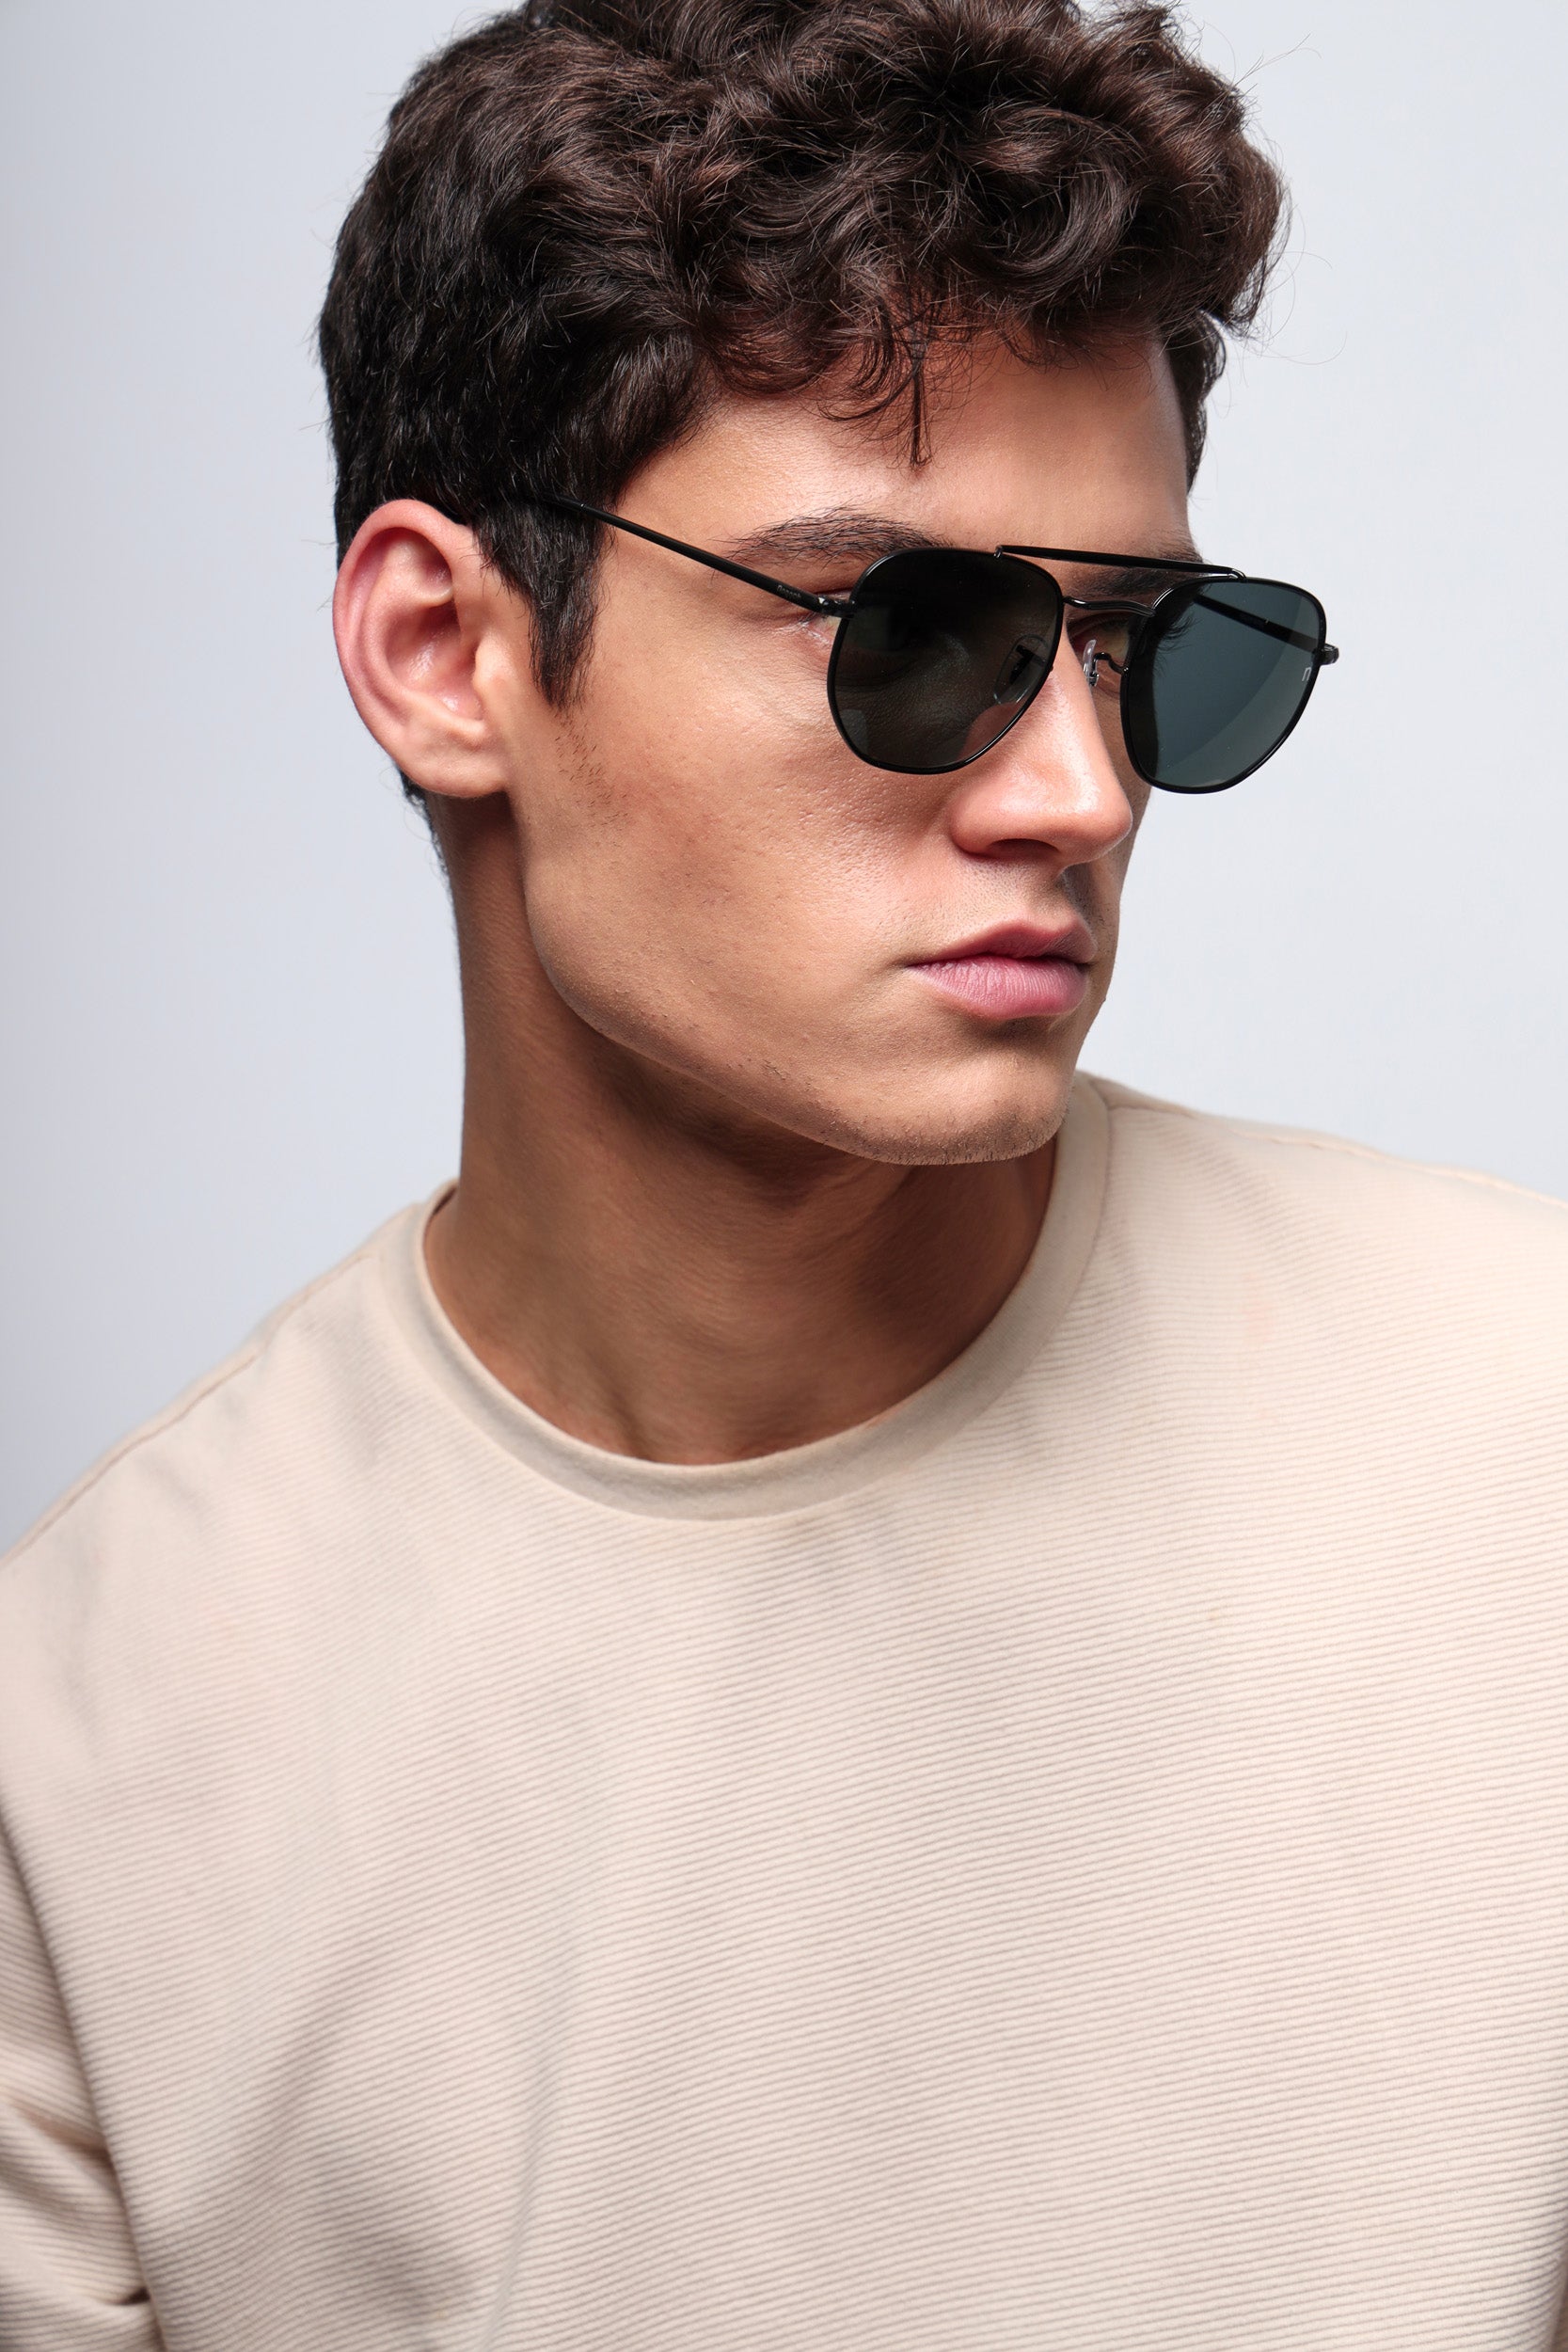 Matrix Polarized Sunglasses for Men for sale | eBay